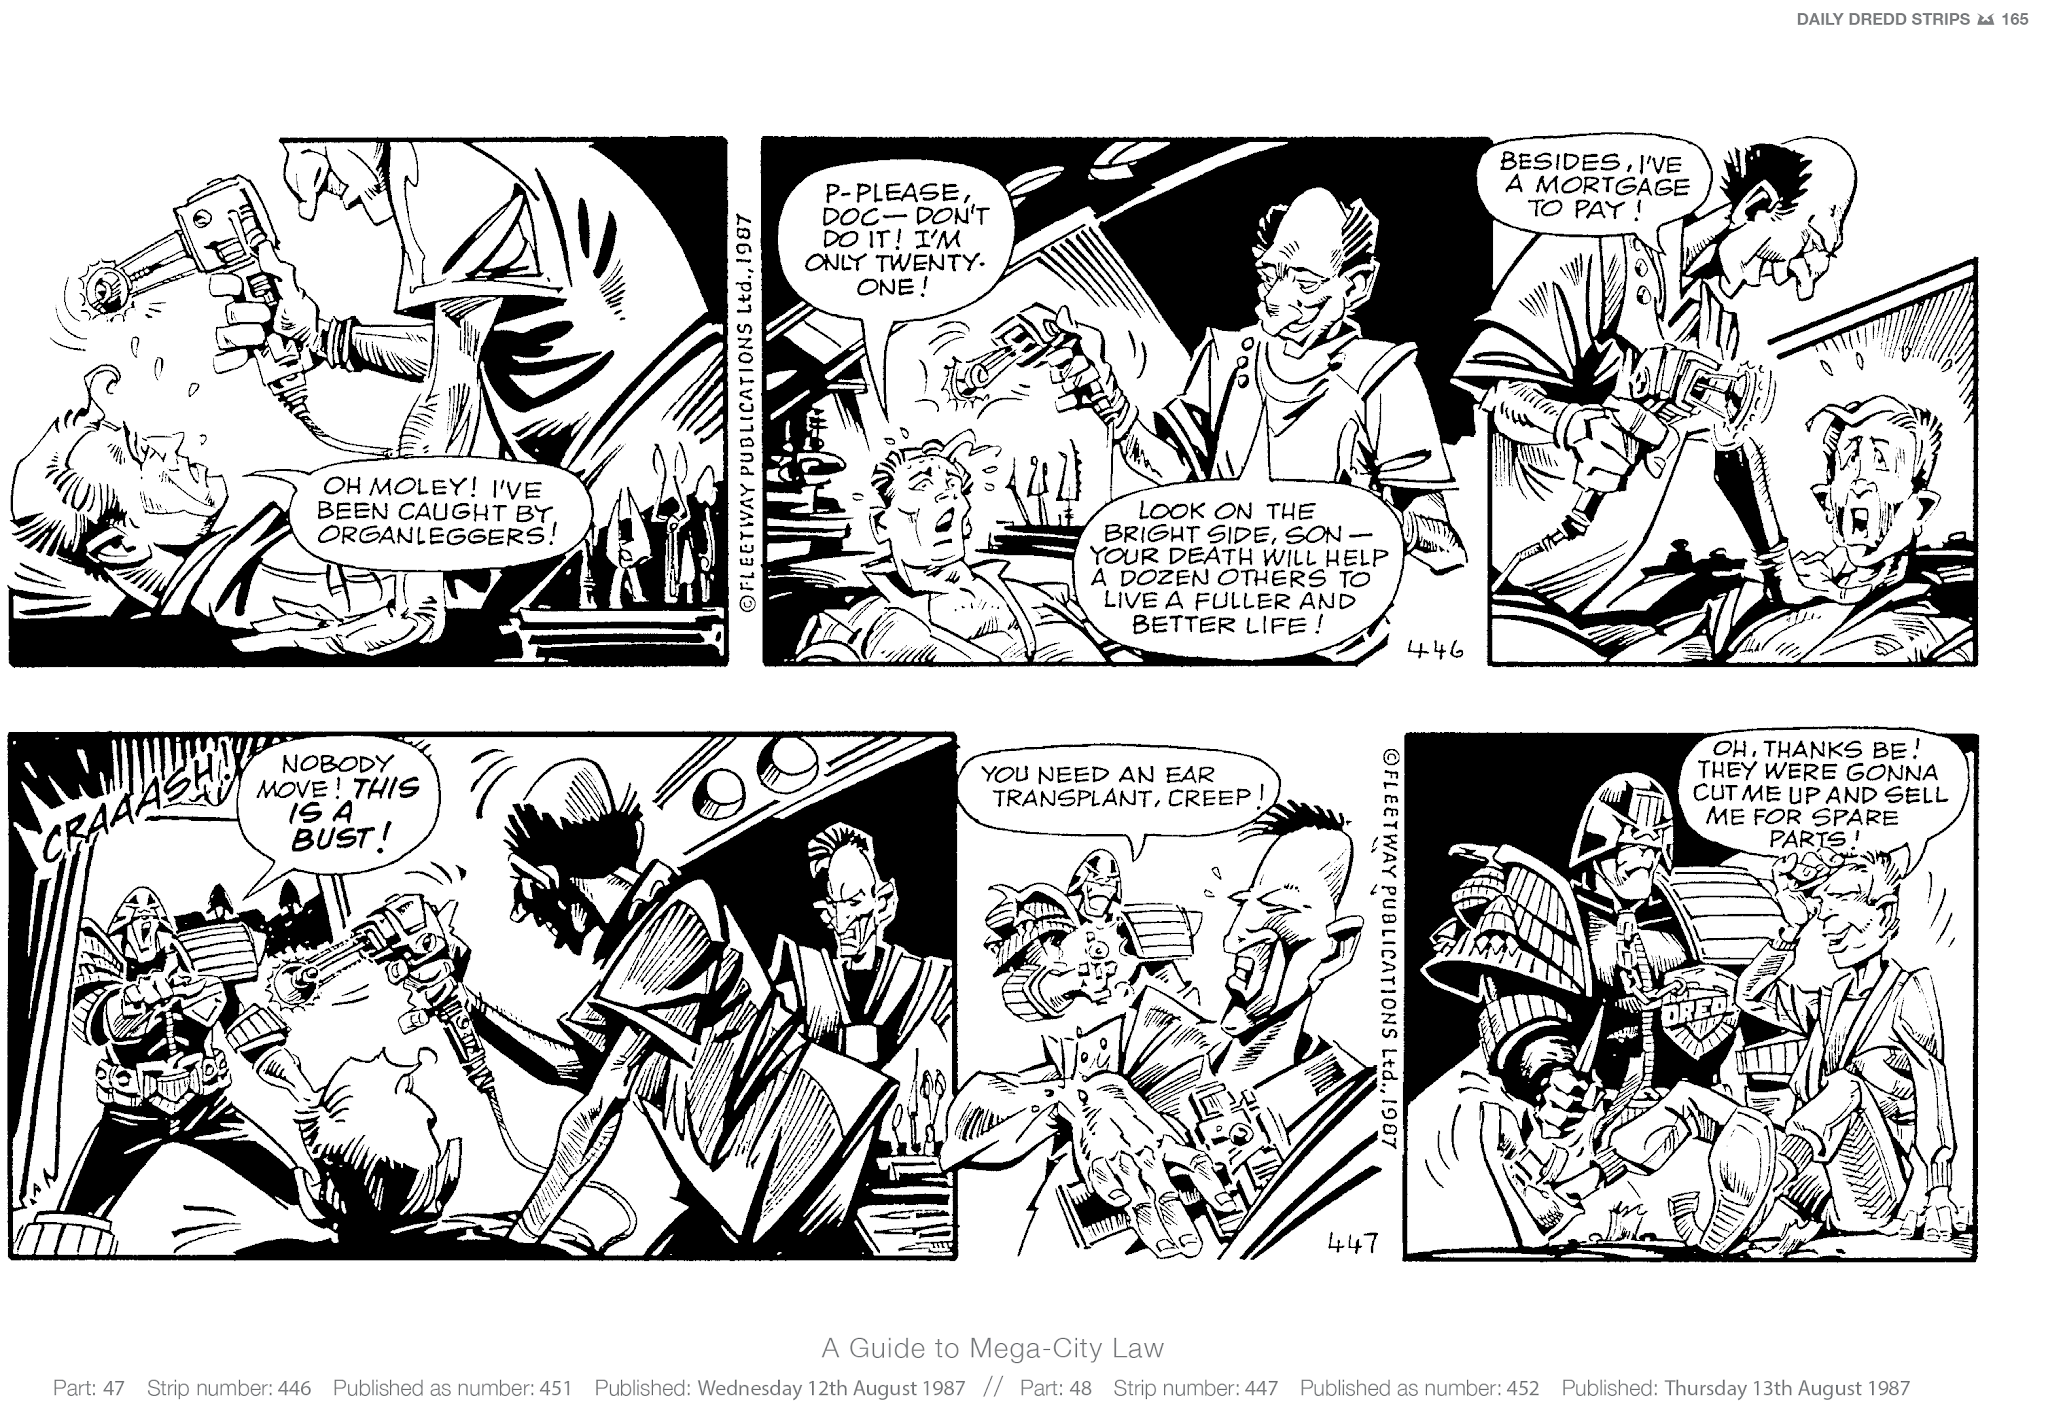 Read online Judge Dredd: The Daily Dredds comic -  Issue # TPB 2 - 168